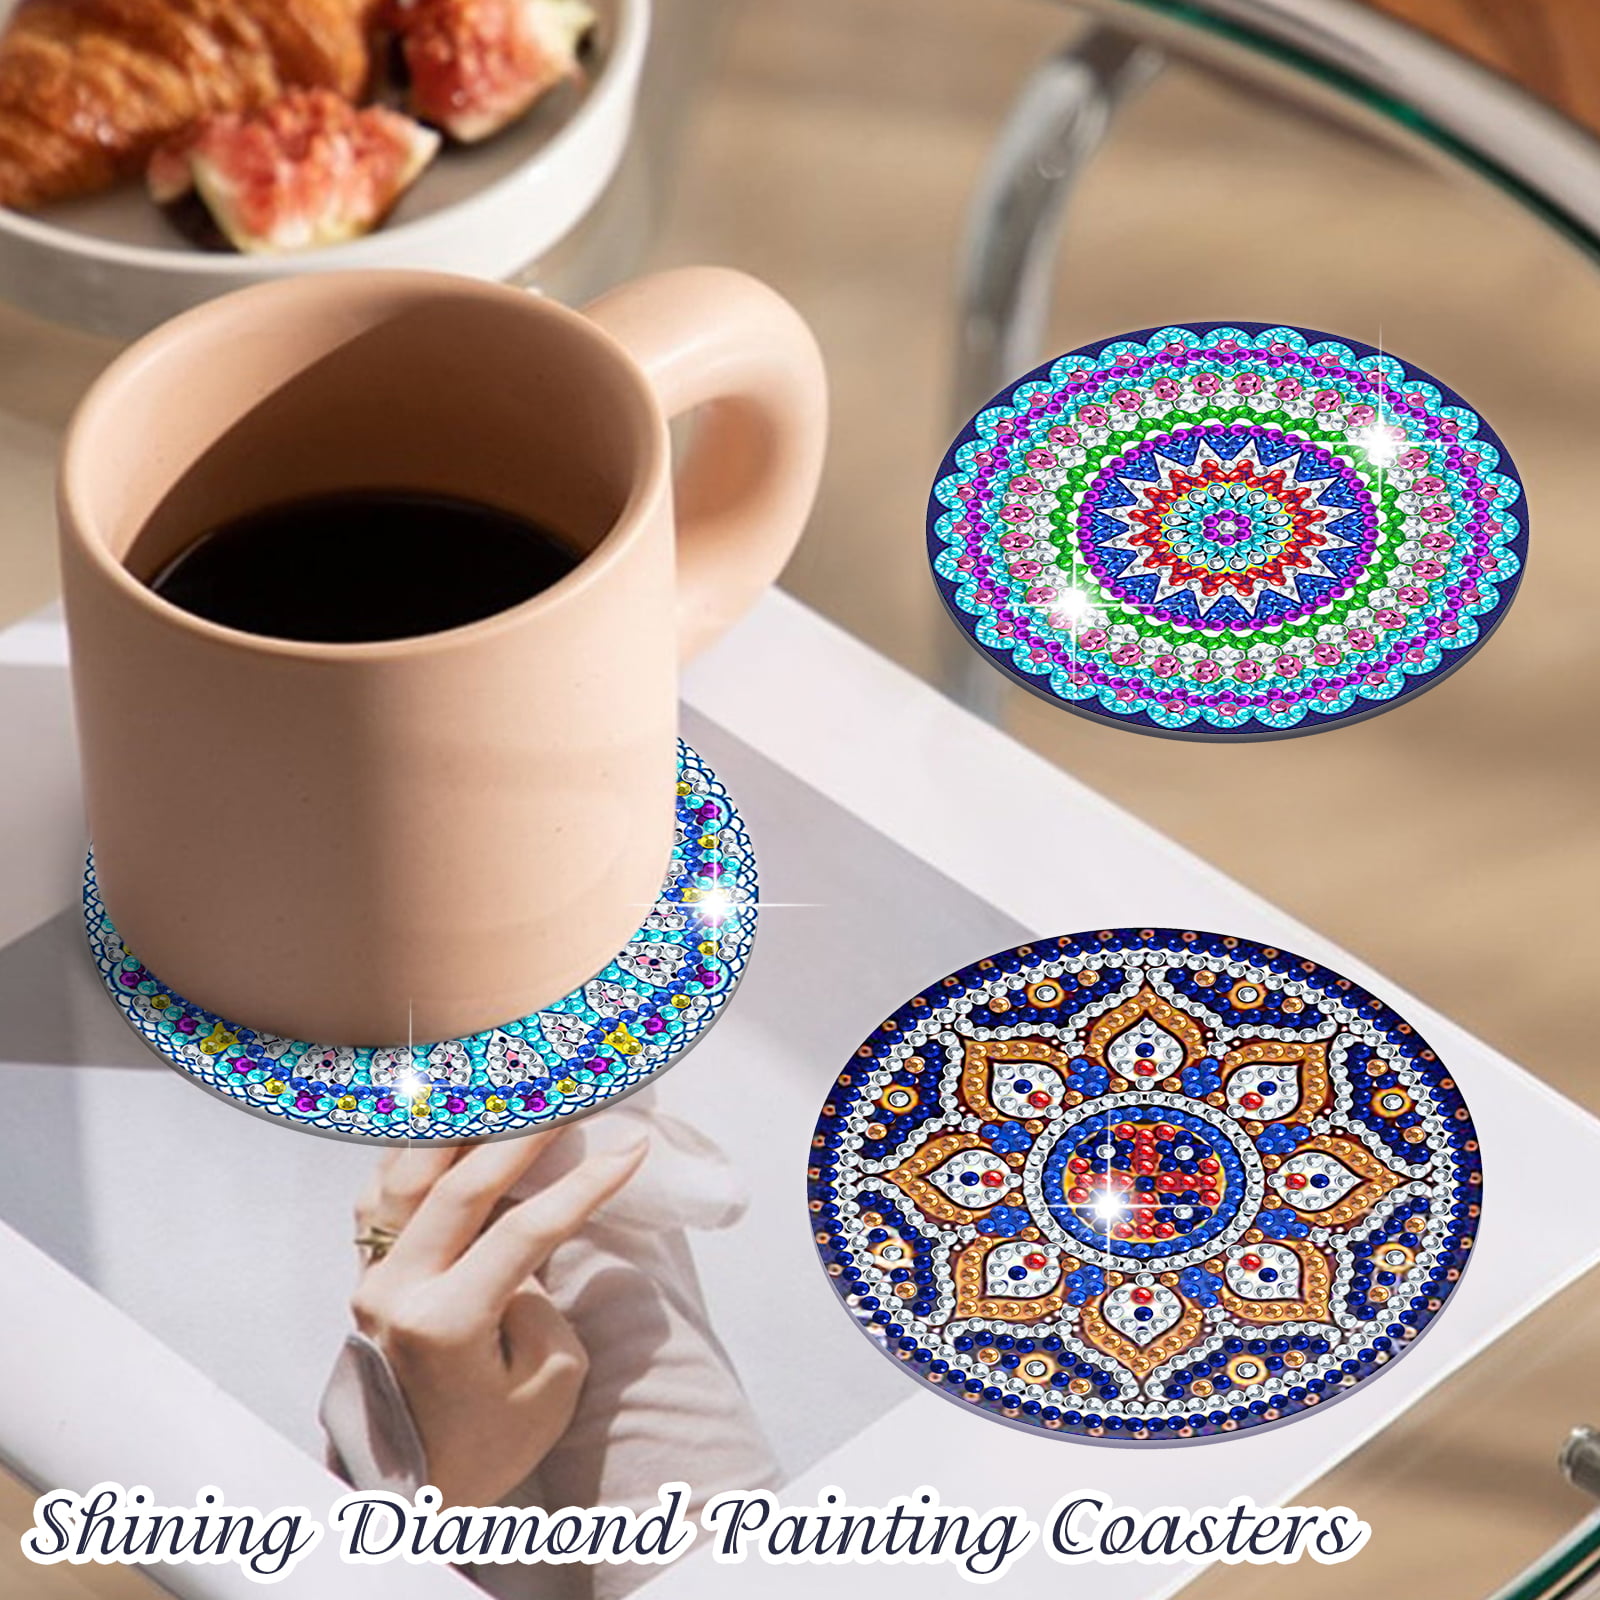 VEGCOO 8 Pcs Diamond Painting Coasters with Holder, DIY Mandala